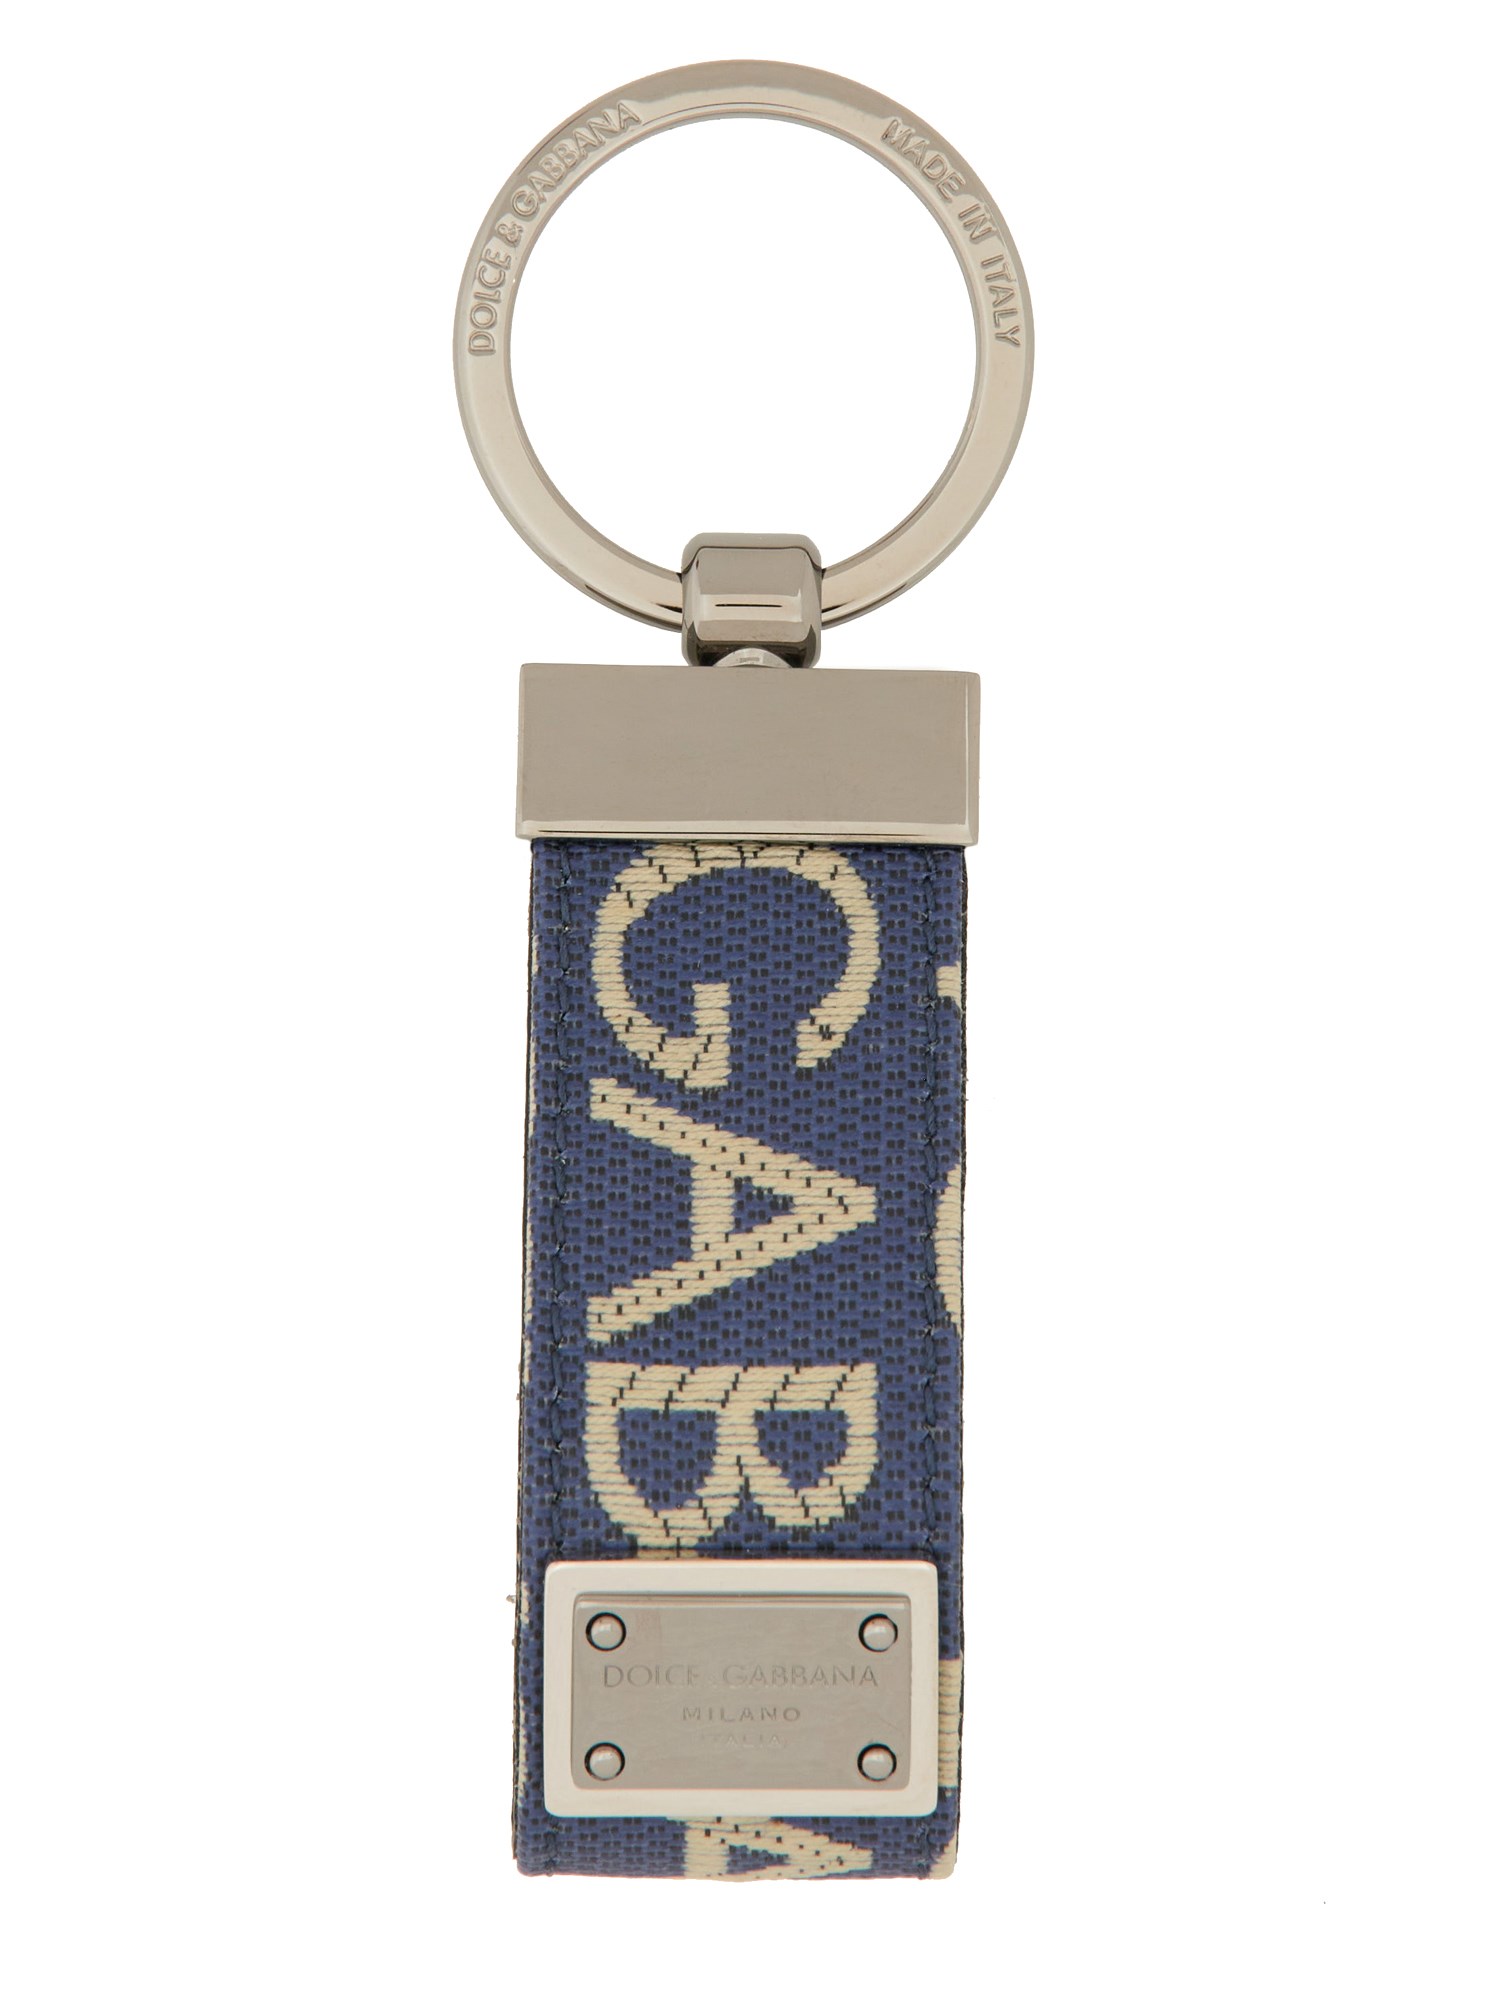 dolce & gabbana keychain with logoed label